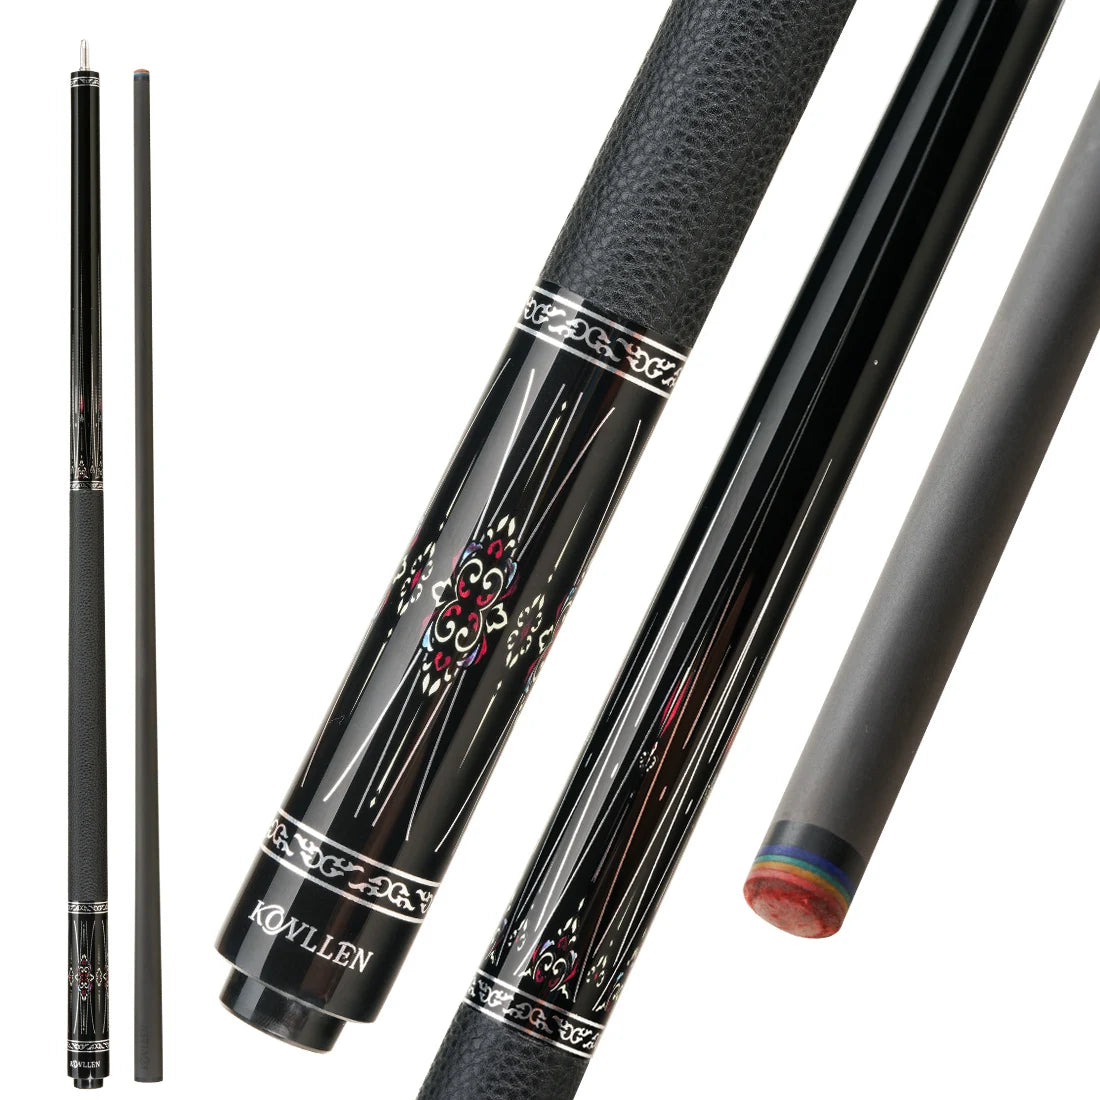 KONLLEN Billiard KL-BP Carbon Fiber Pool Cue Stick 12.2mm Tip 3*8/8 Uniloc Joint Pin Professional Low Deflection Stick Kit